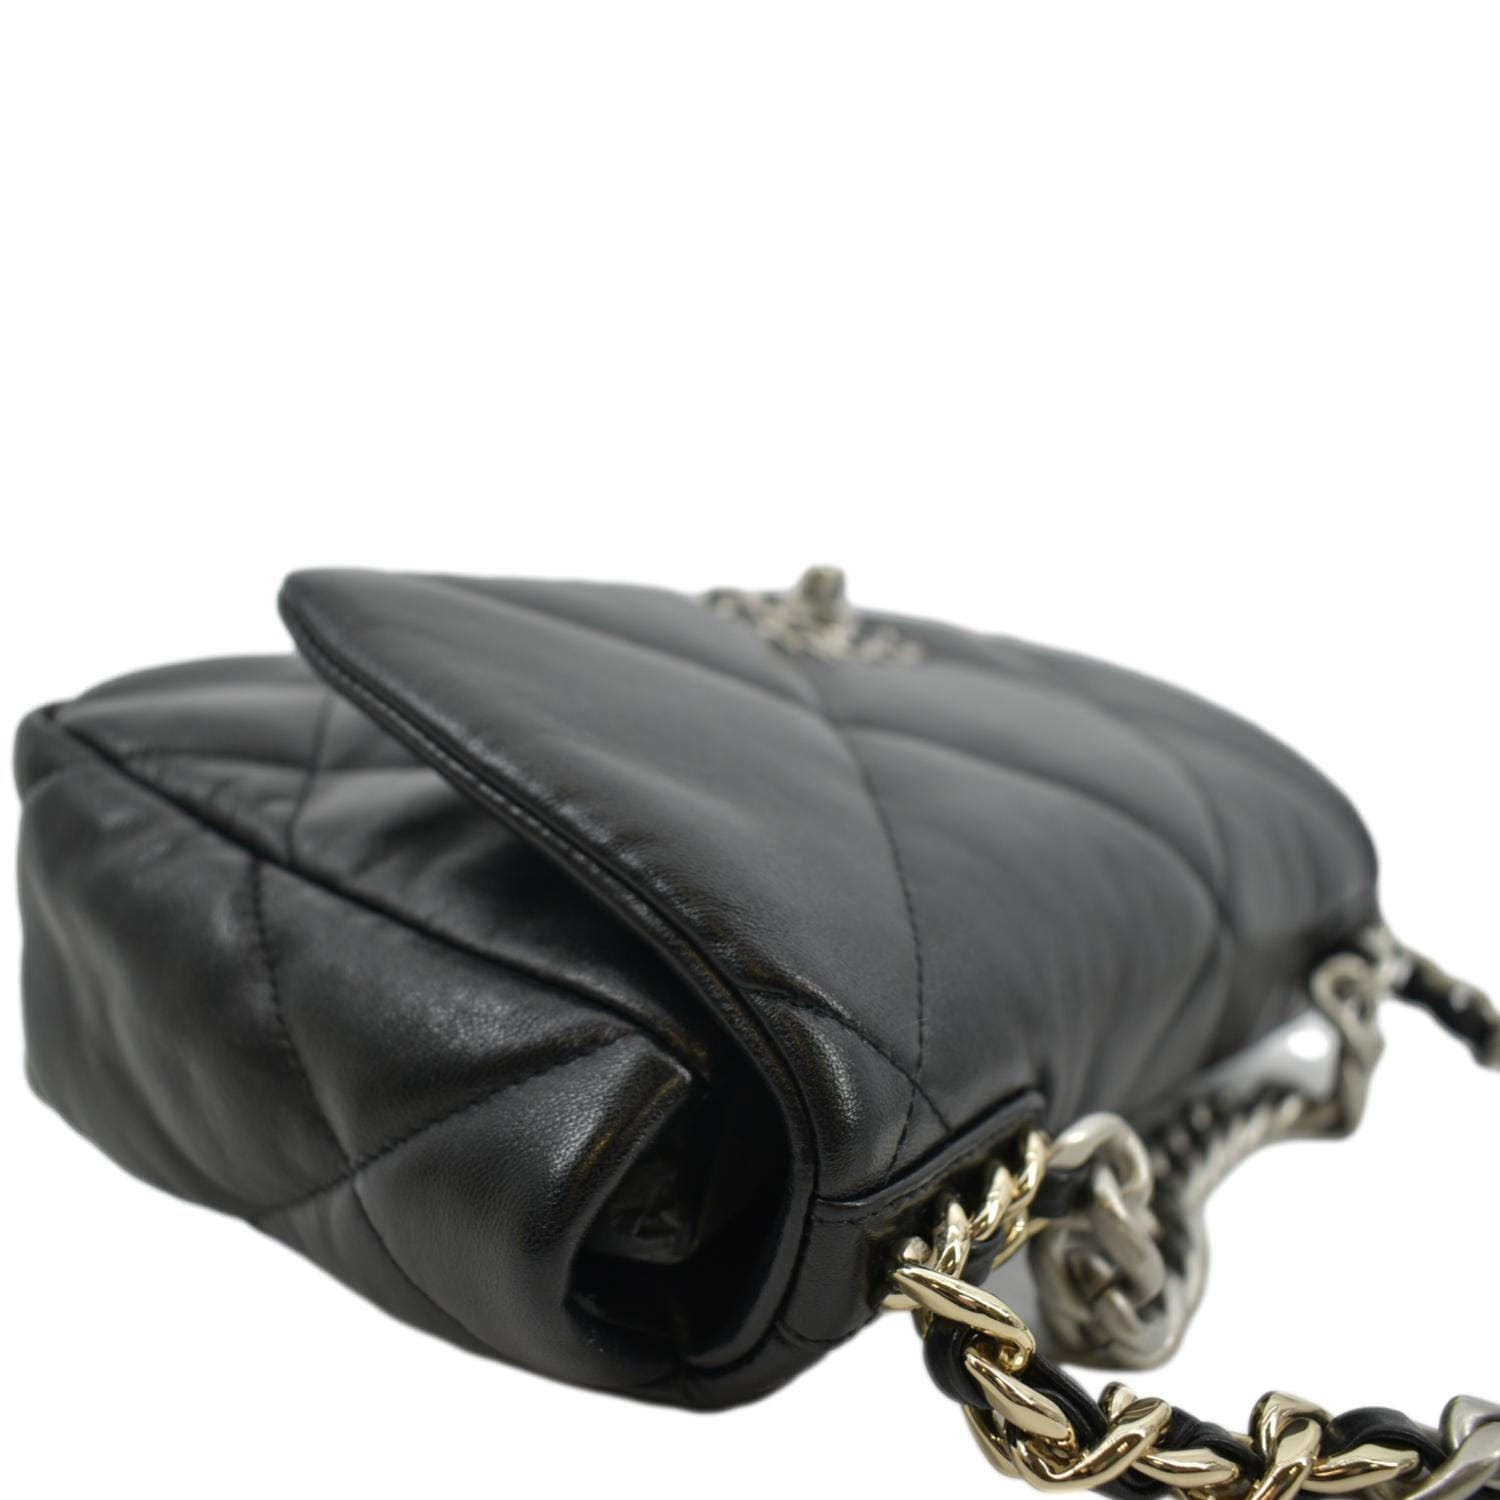  Lckaey Purse Organizer Insert for Chanel 19 Small bag